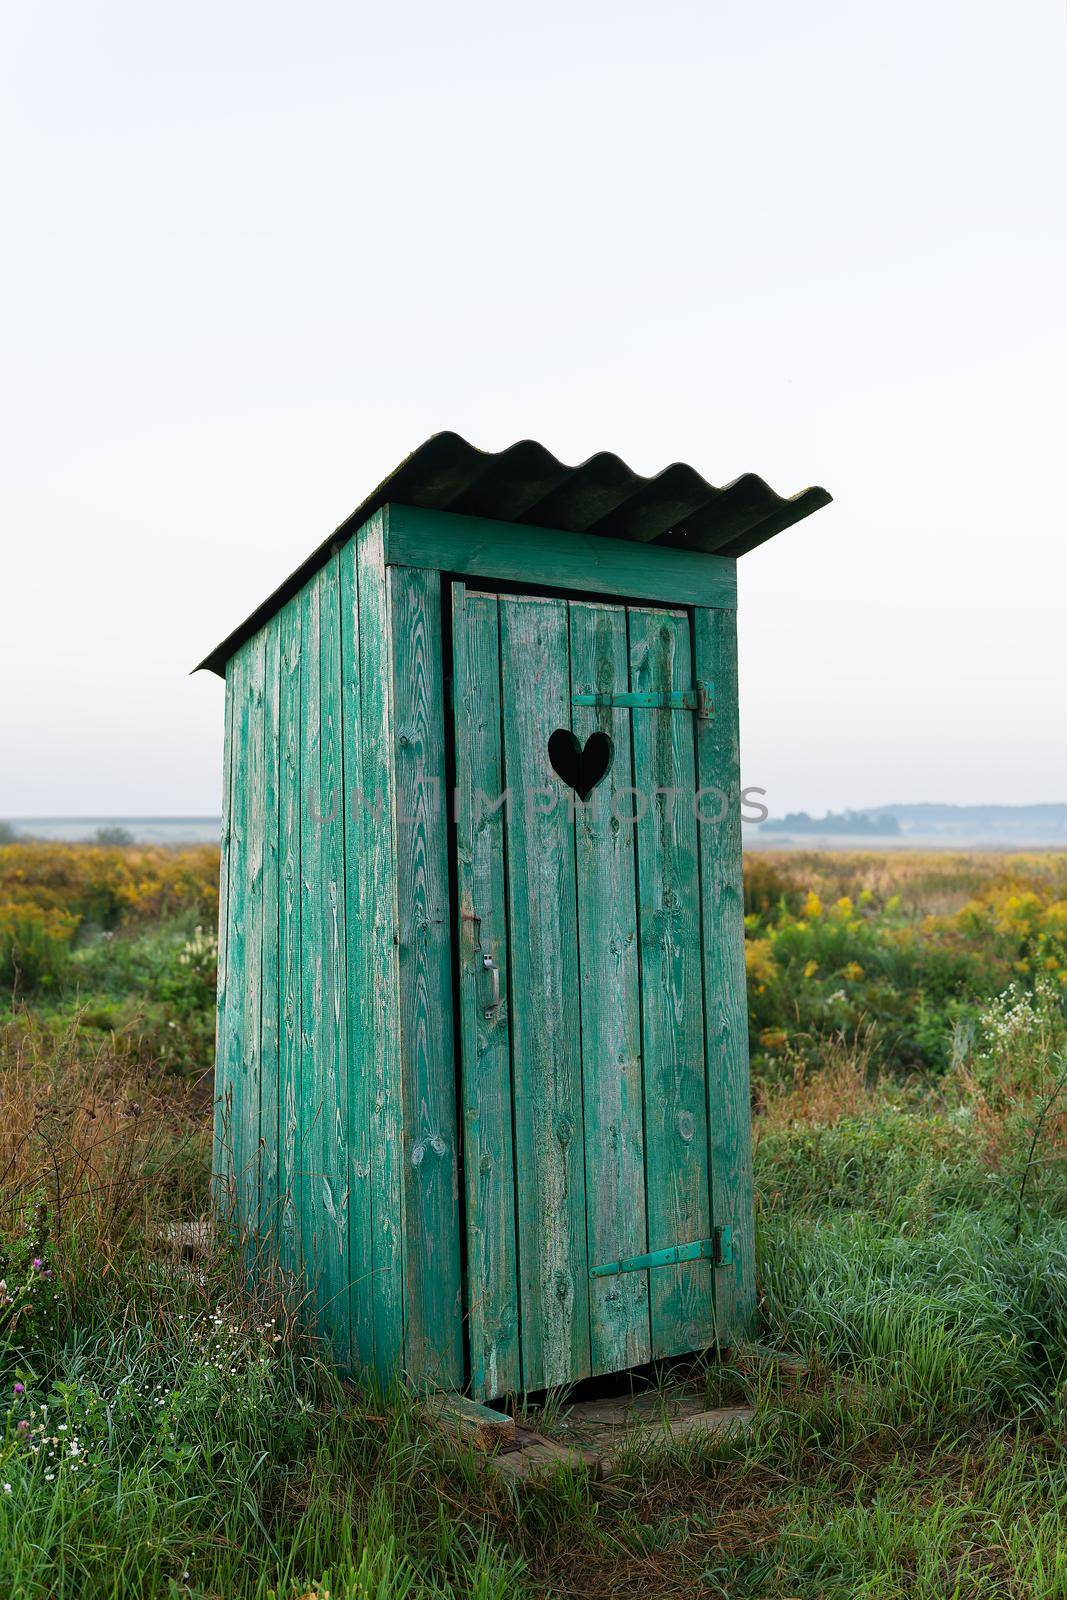 Heart shape on the old wooden toilet door, green toilet in the field. Outdoor recreation